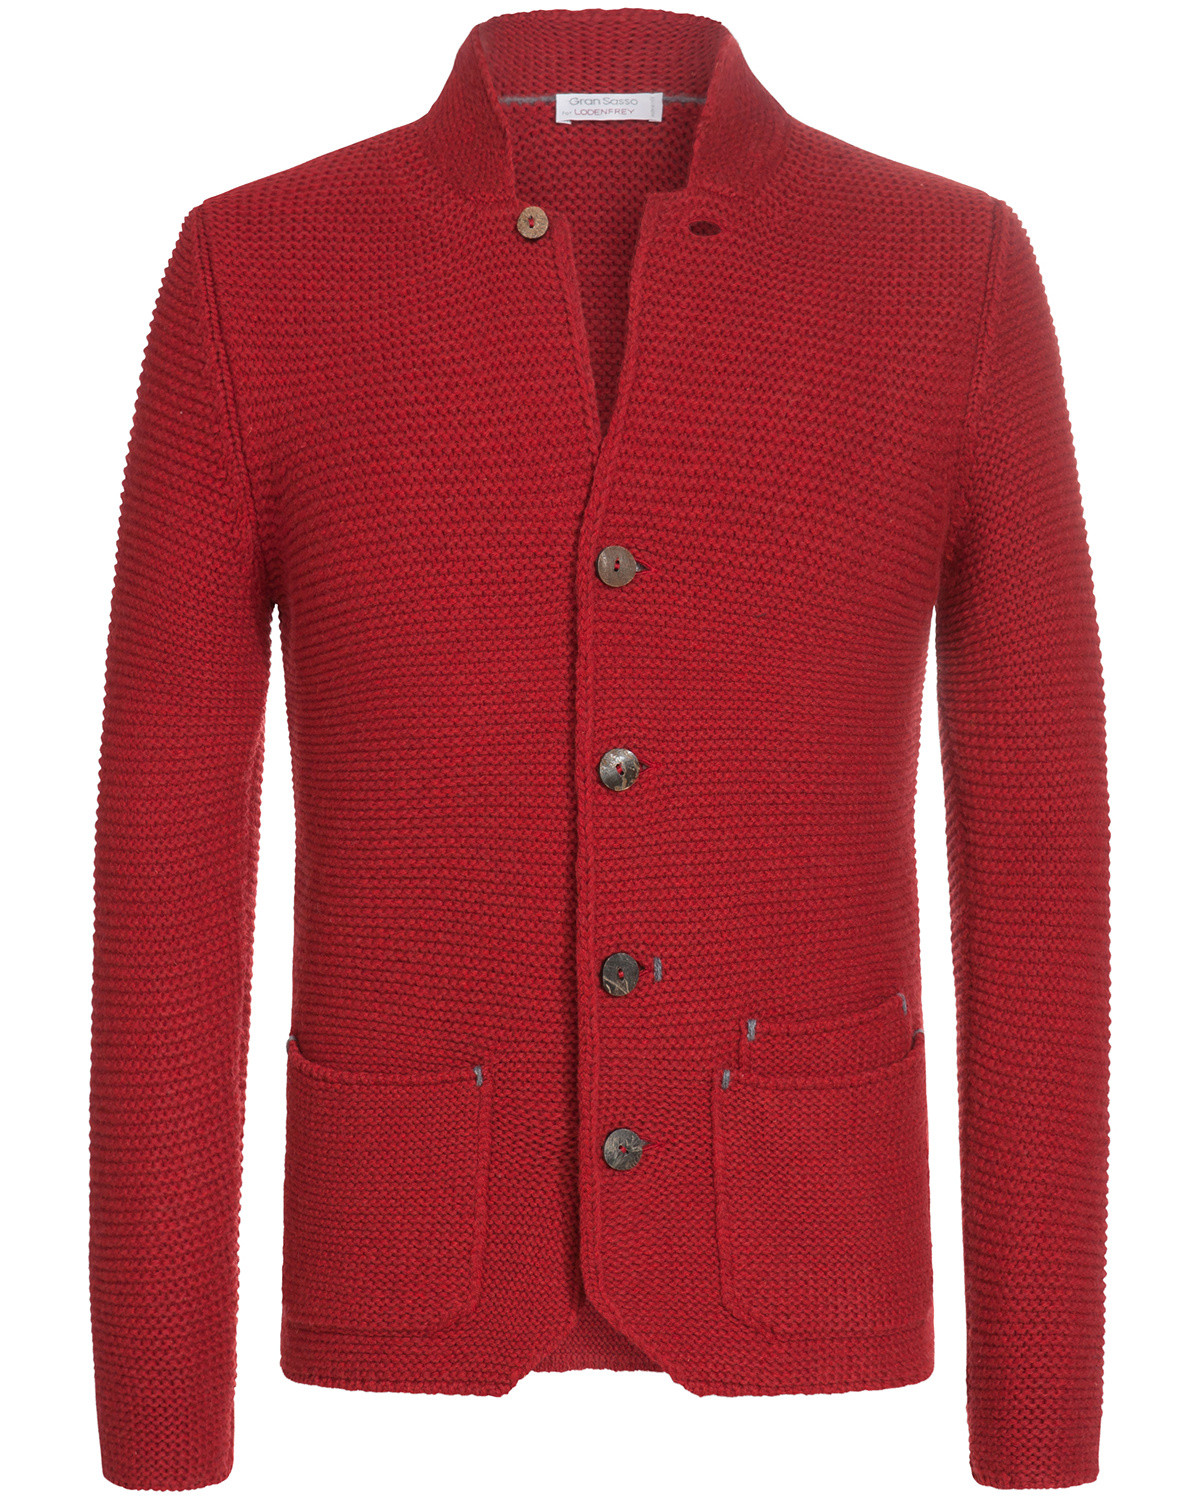 Classic Gran Sasso Trachten jacket in wool